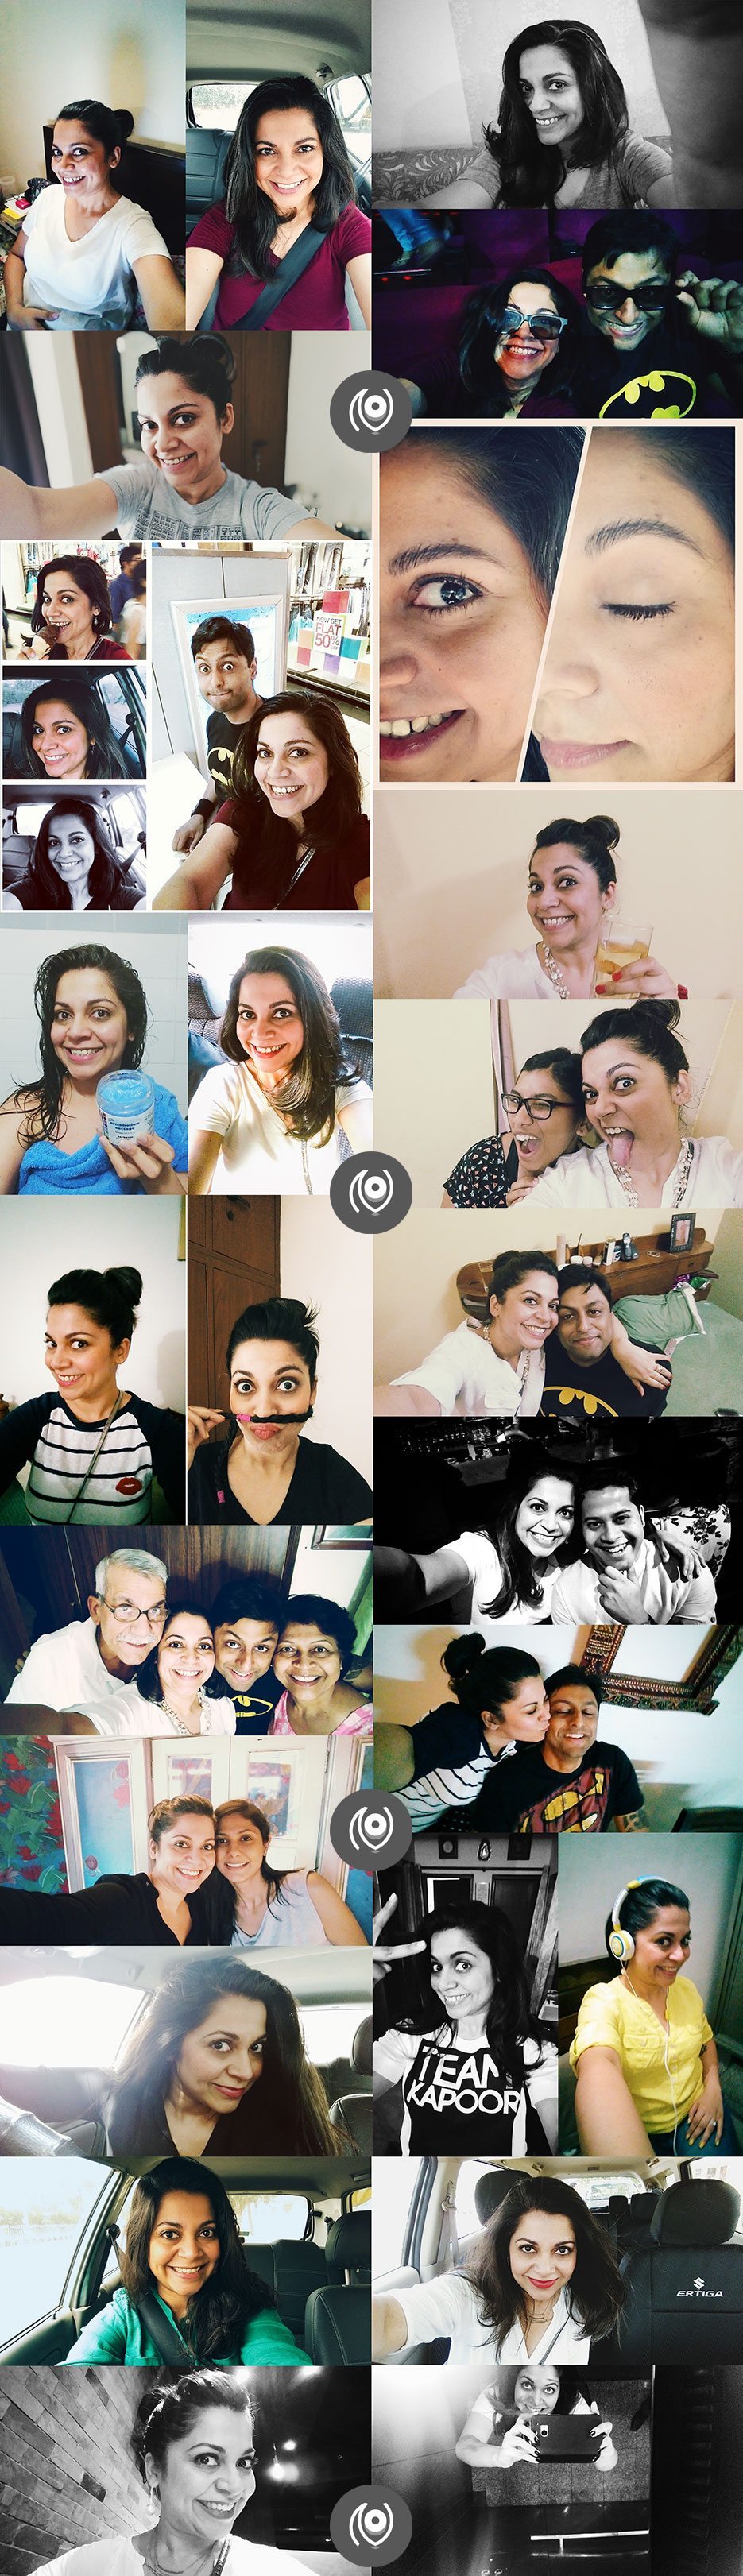 Naina.co-Photographer-Raconteuse-Storyteller-Luxury-Lifestyle-August-2014-HTC-One-M8-Smartphone-Camera-Mobile